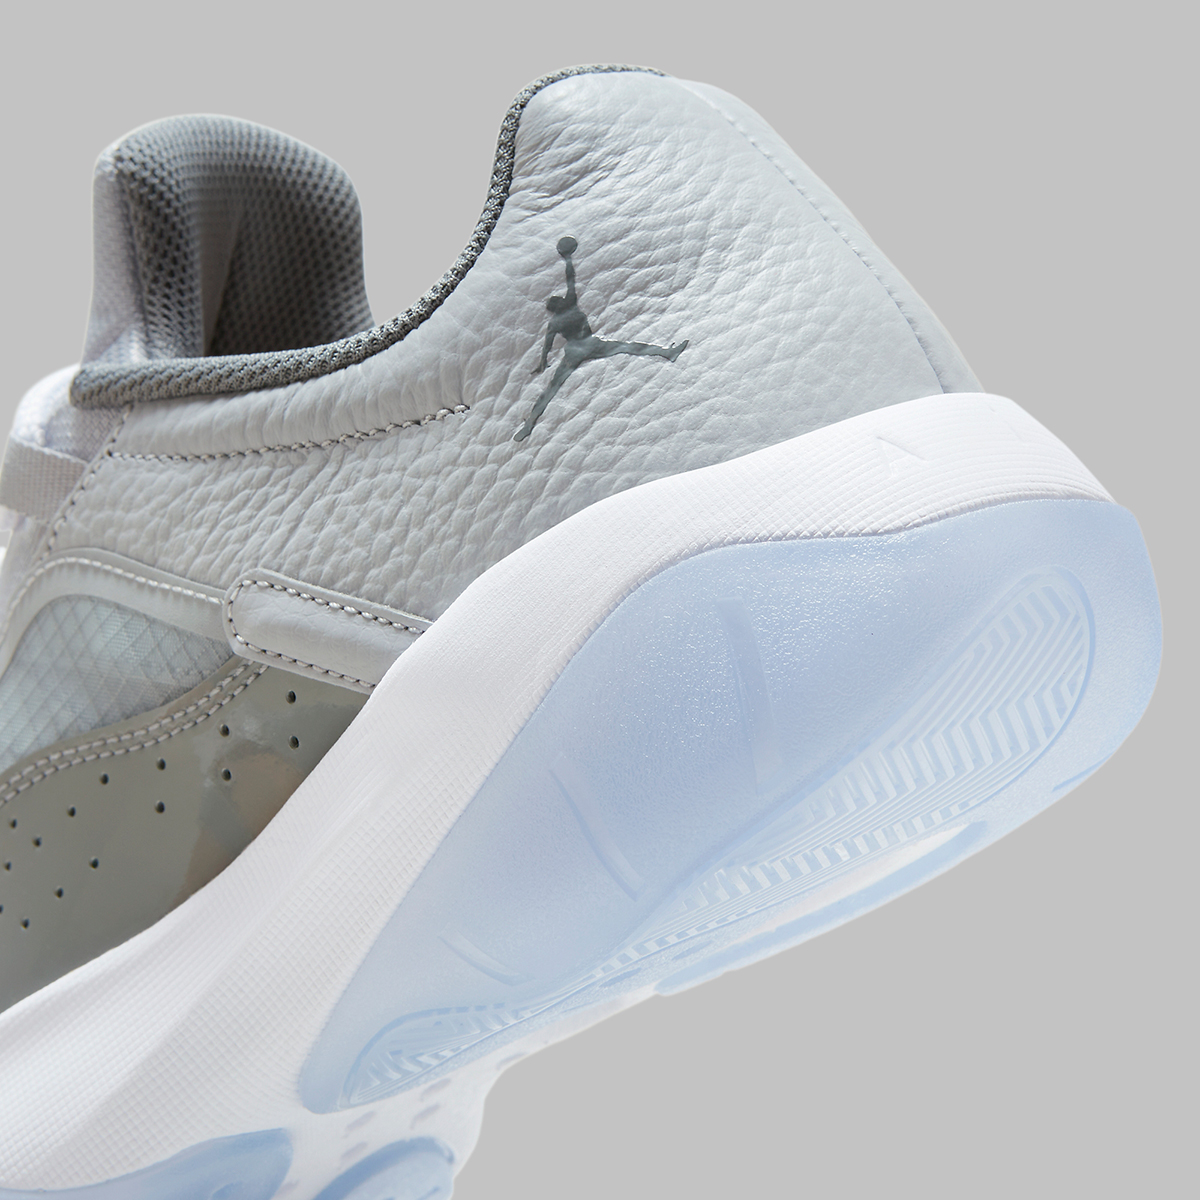 Nike look jordan кросівки найк джордан лакова шкіра 36-40 Cmft Low Cool Grey Dn4180 012 7